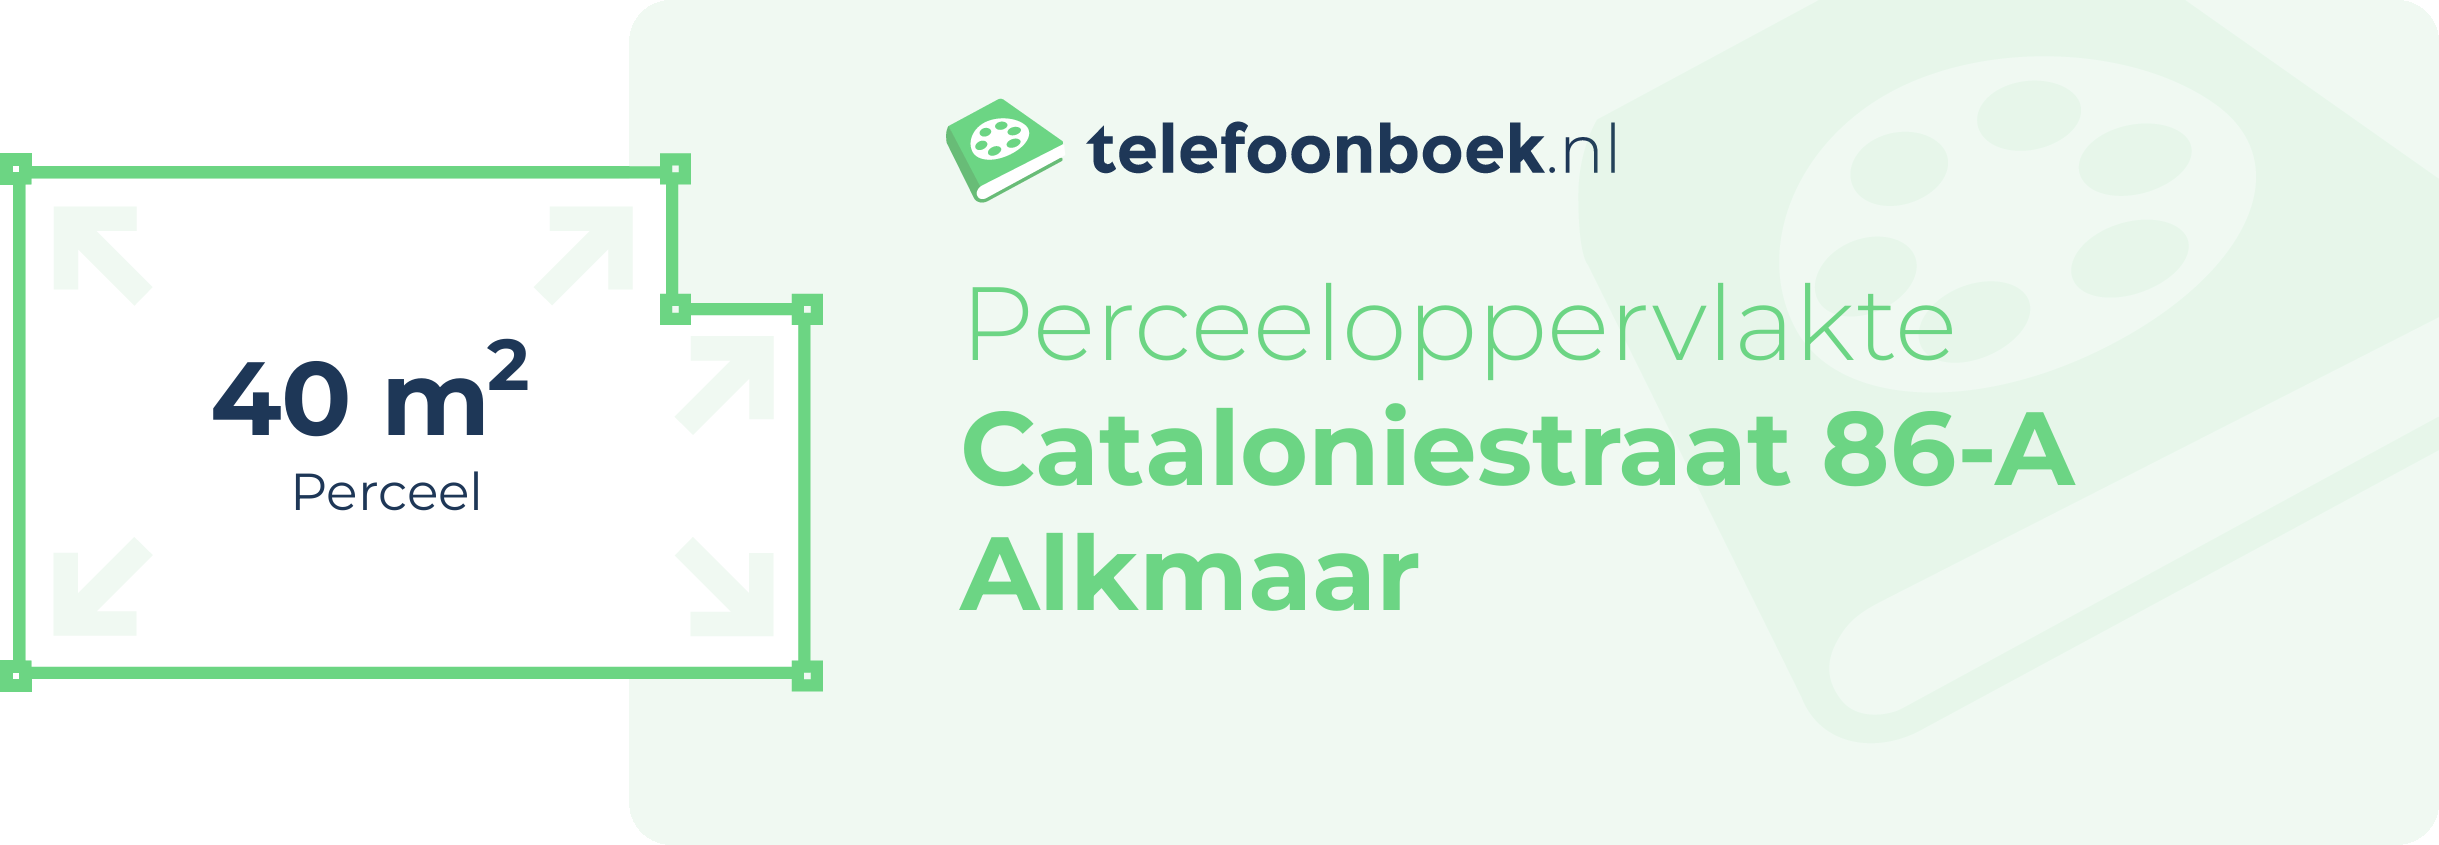 Perceeloppervlakte Cataloniestraat 86-A Alkmaar